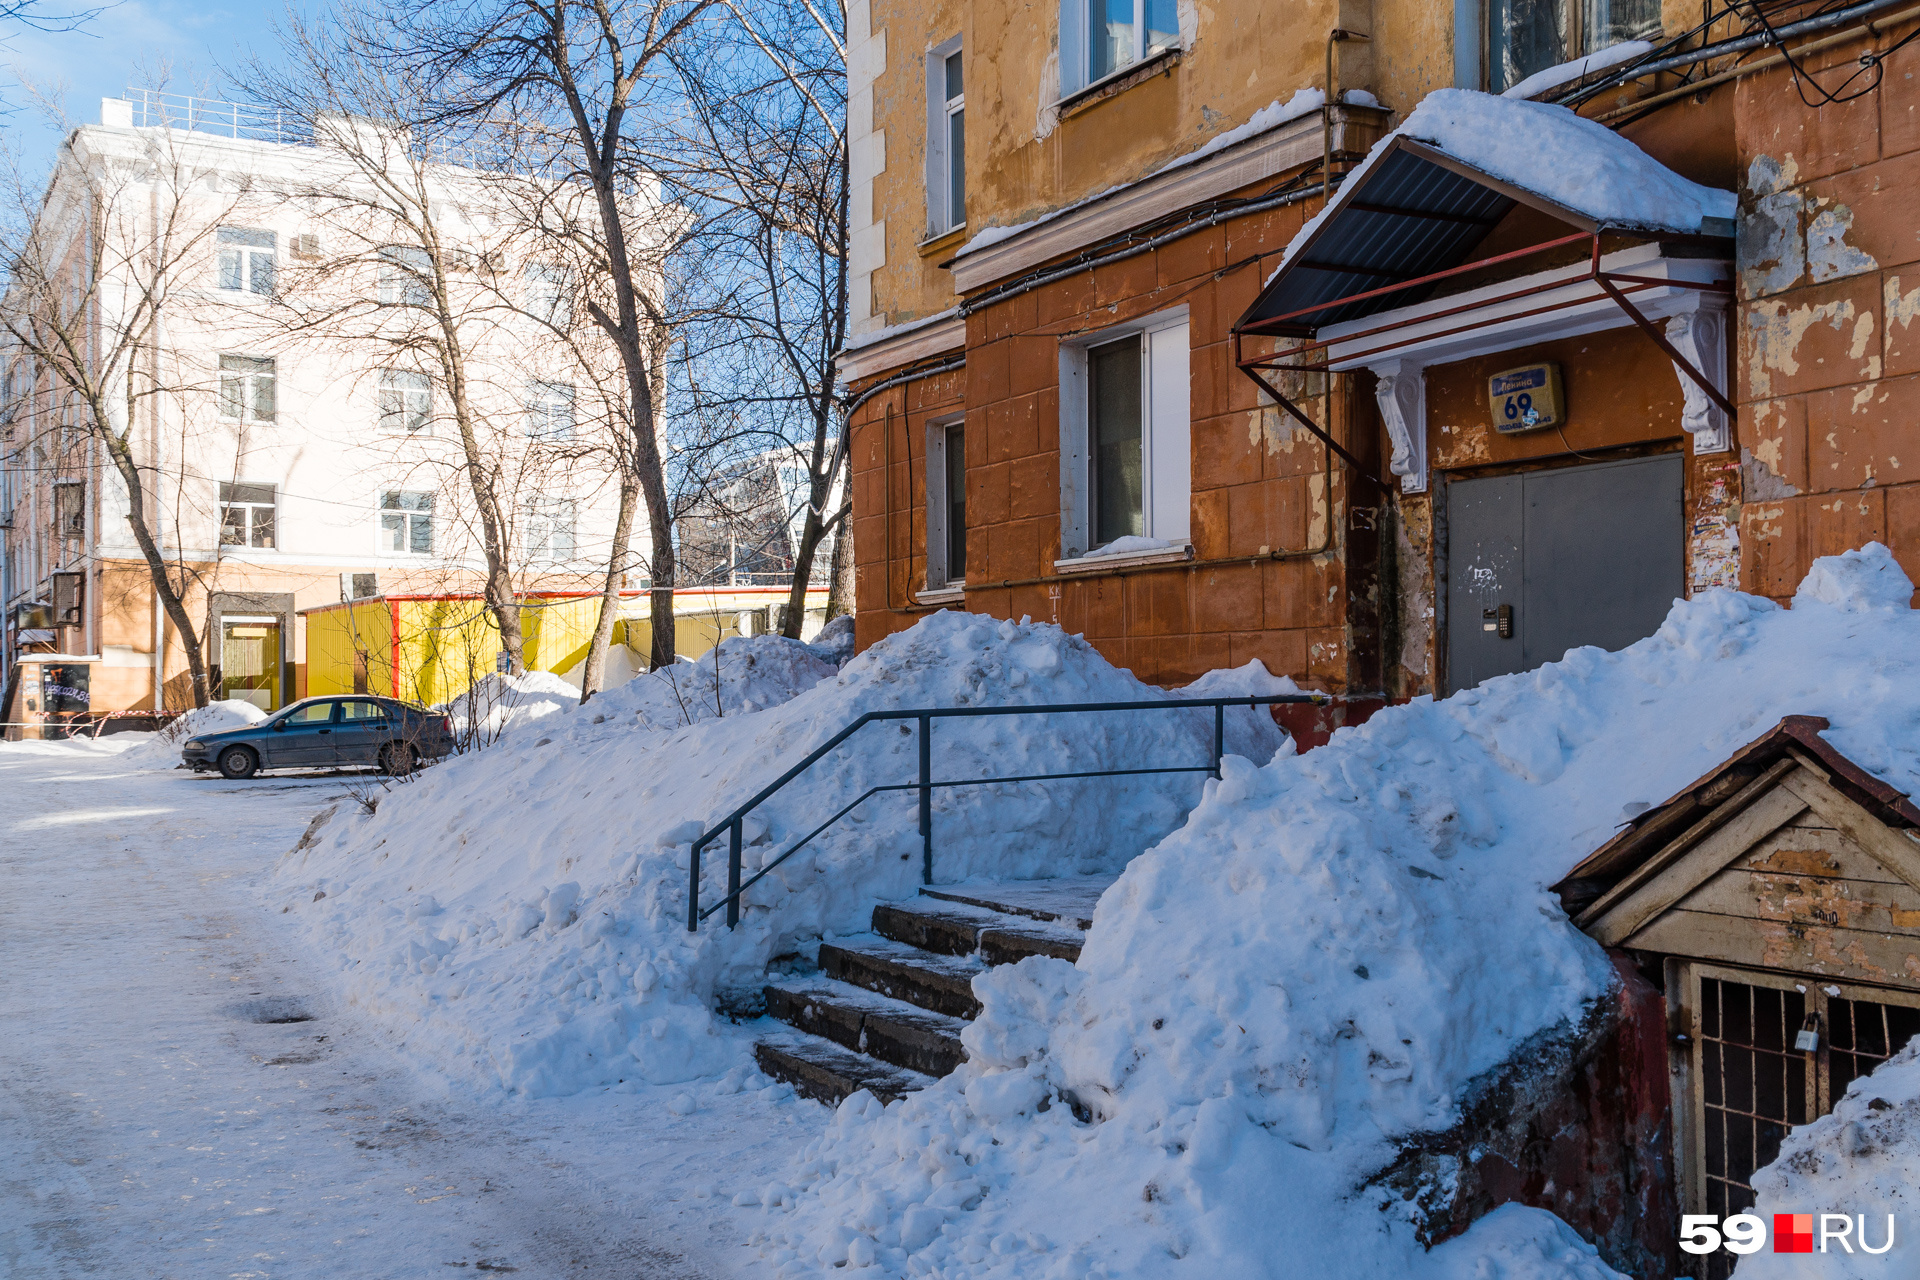 Киоски на Ленина, 69 стоят не во дворе, а рядом с домом — на фото виден один из них, с желтыми стенами